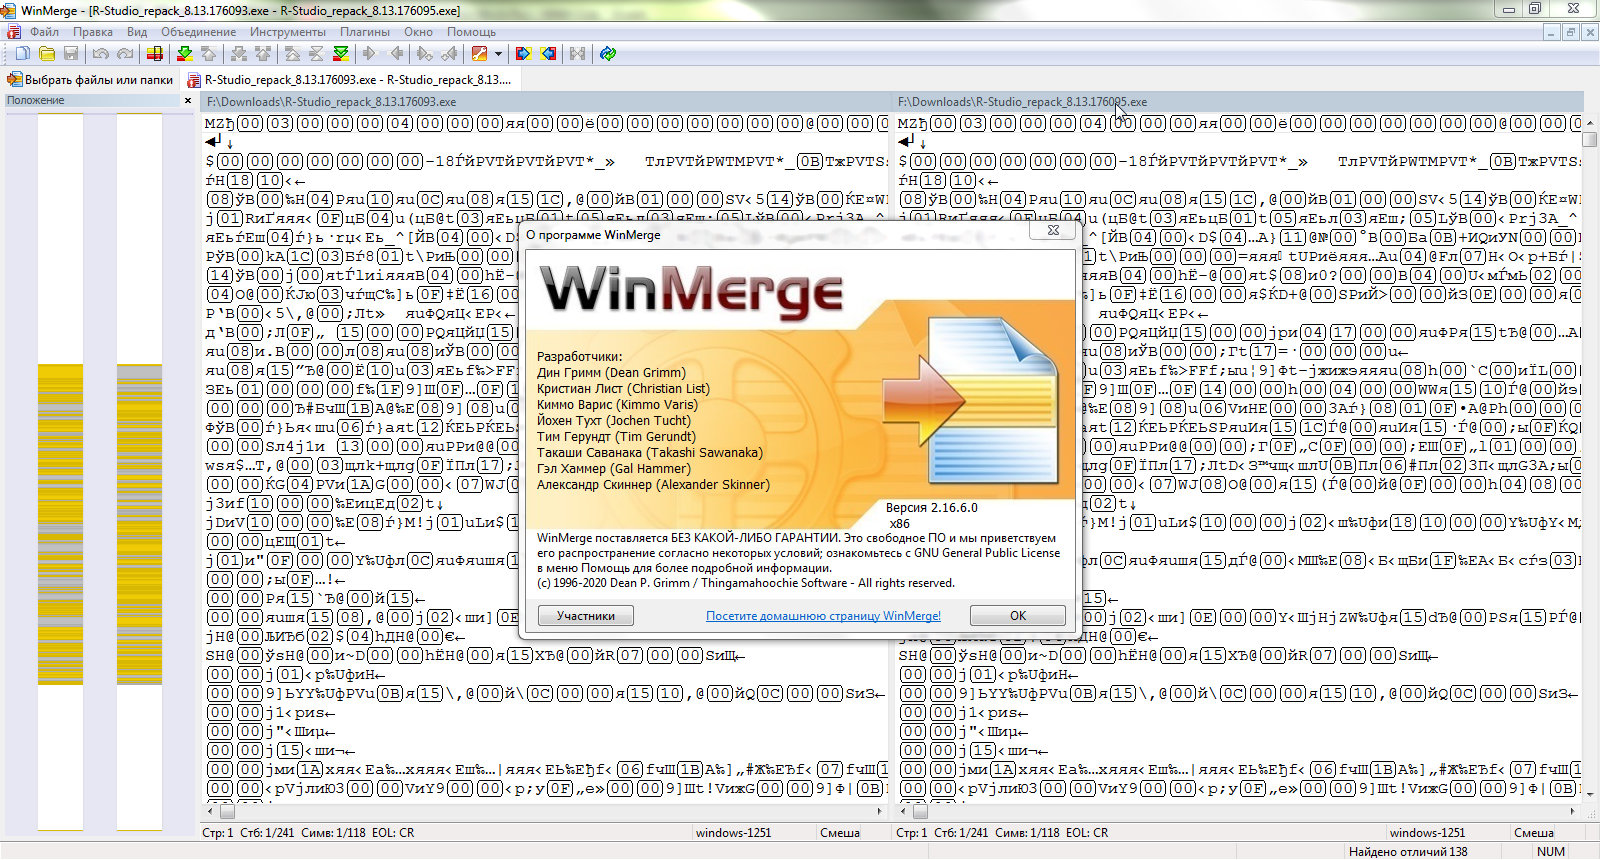 instal the new WinMerge 2.16.33